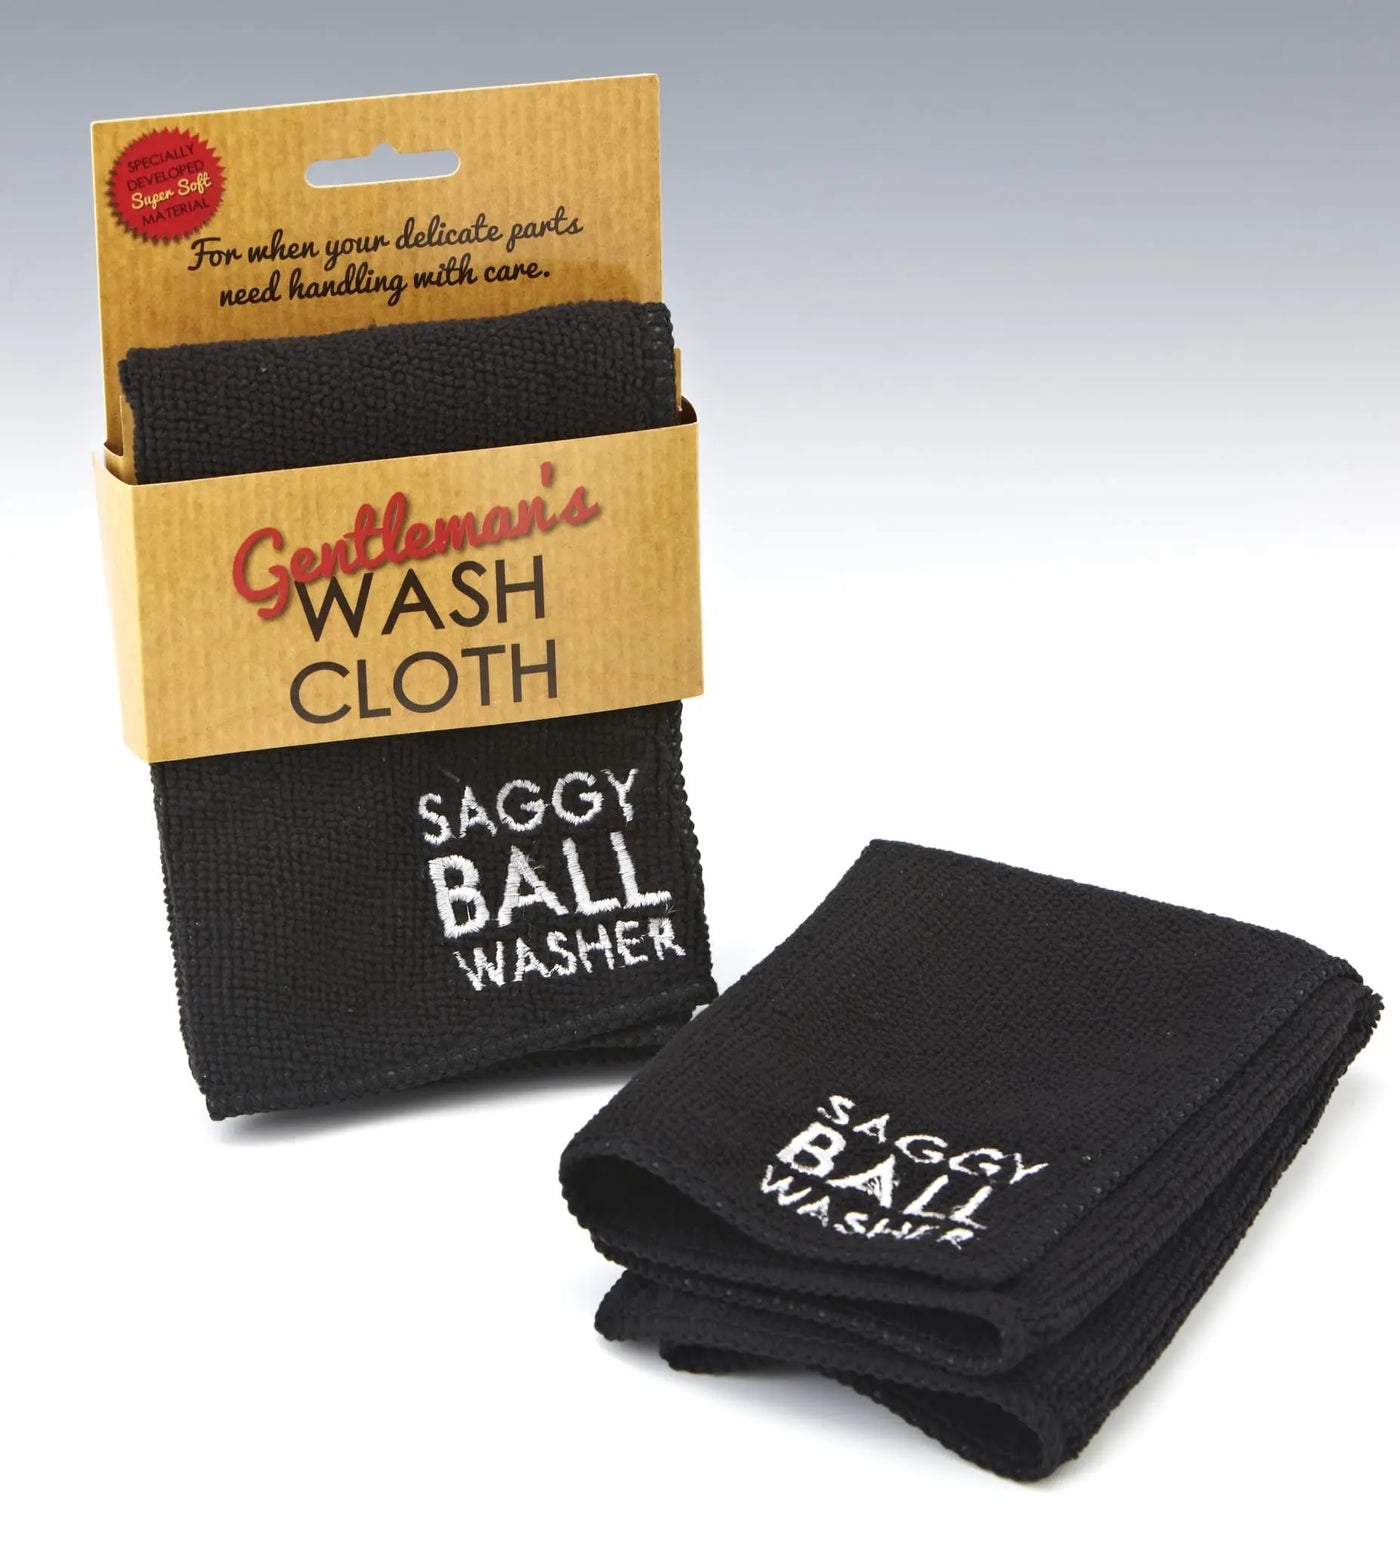 Gentleman's Saggy Ball Wash Cloth - TwoBeeps.co.uk